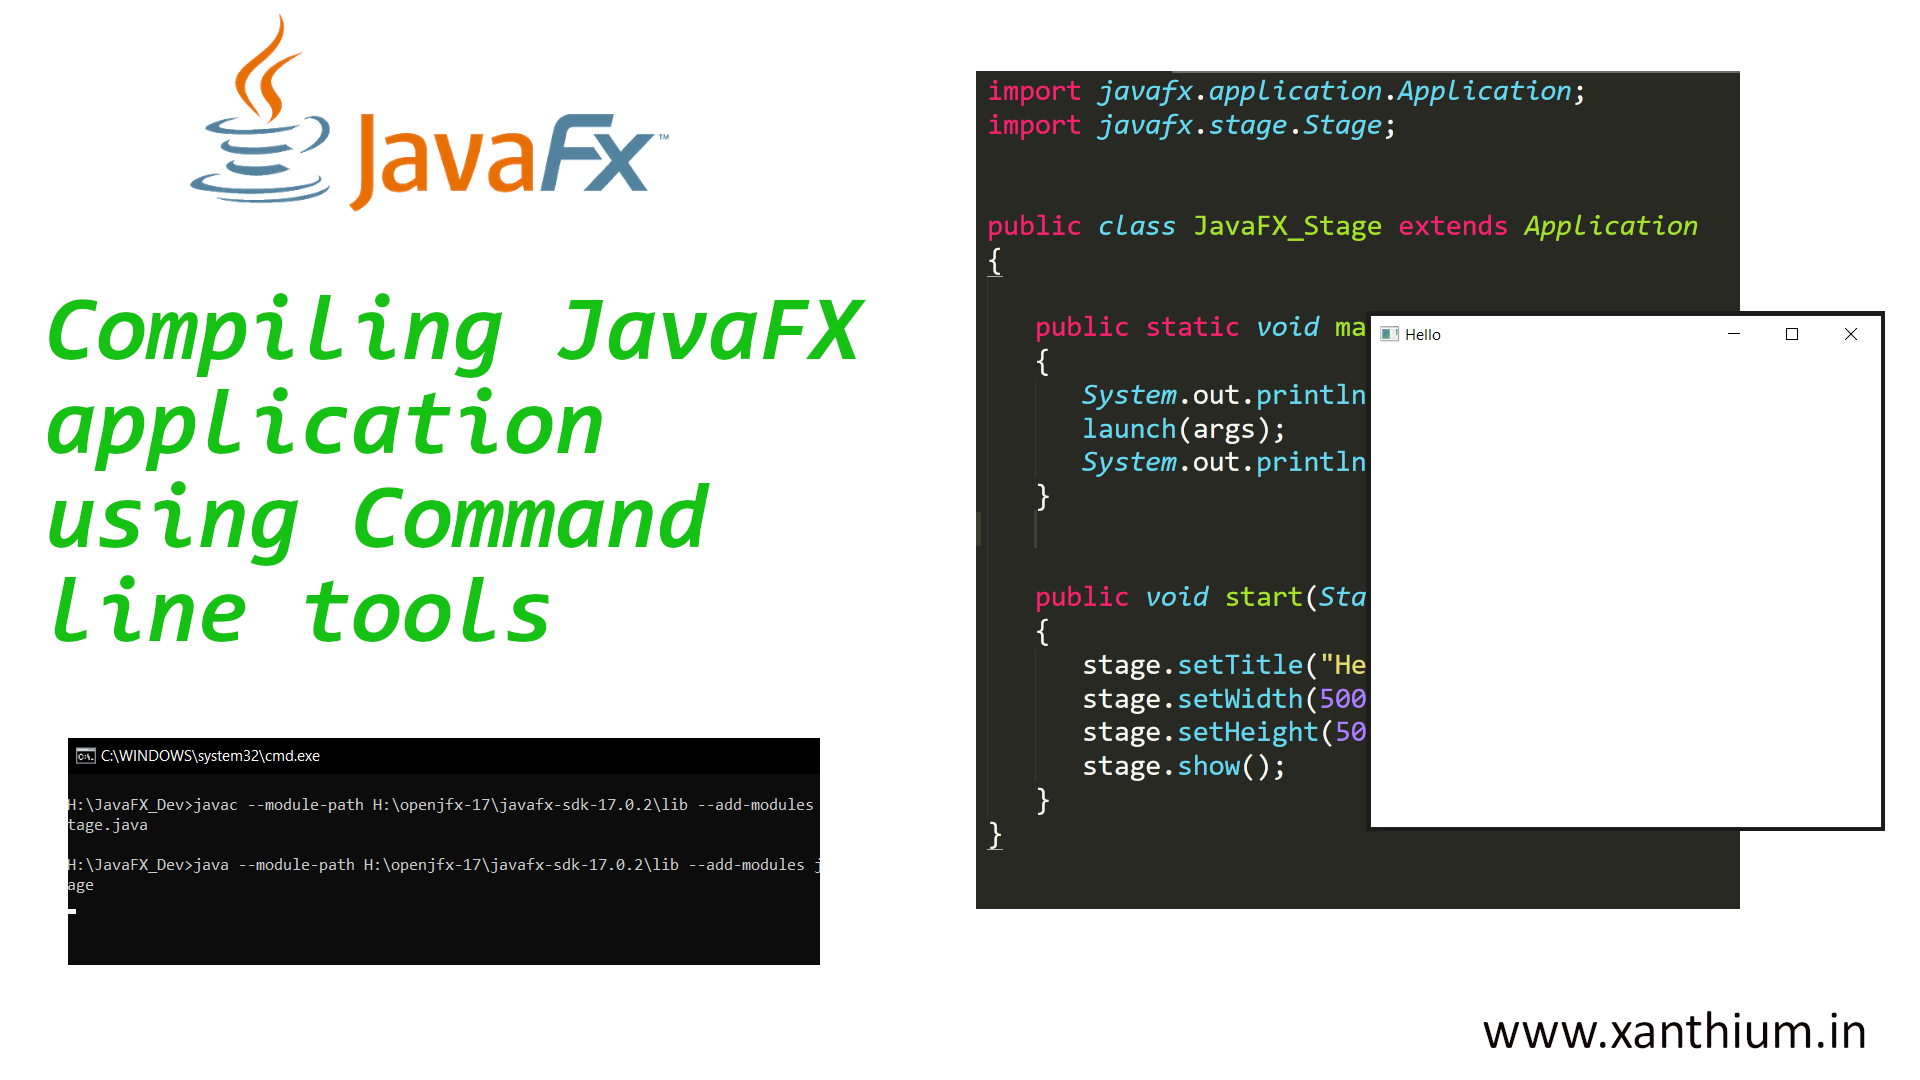 javafx-cmd-tools-banner.png